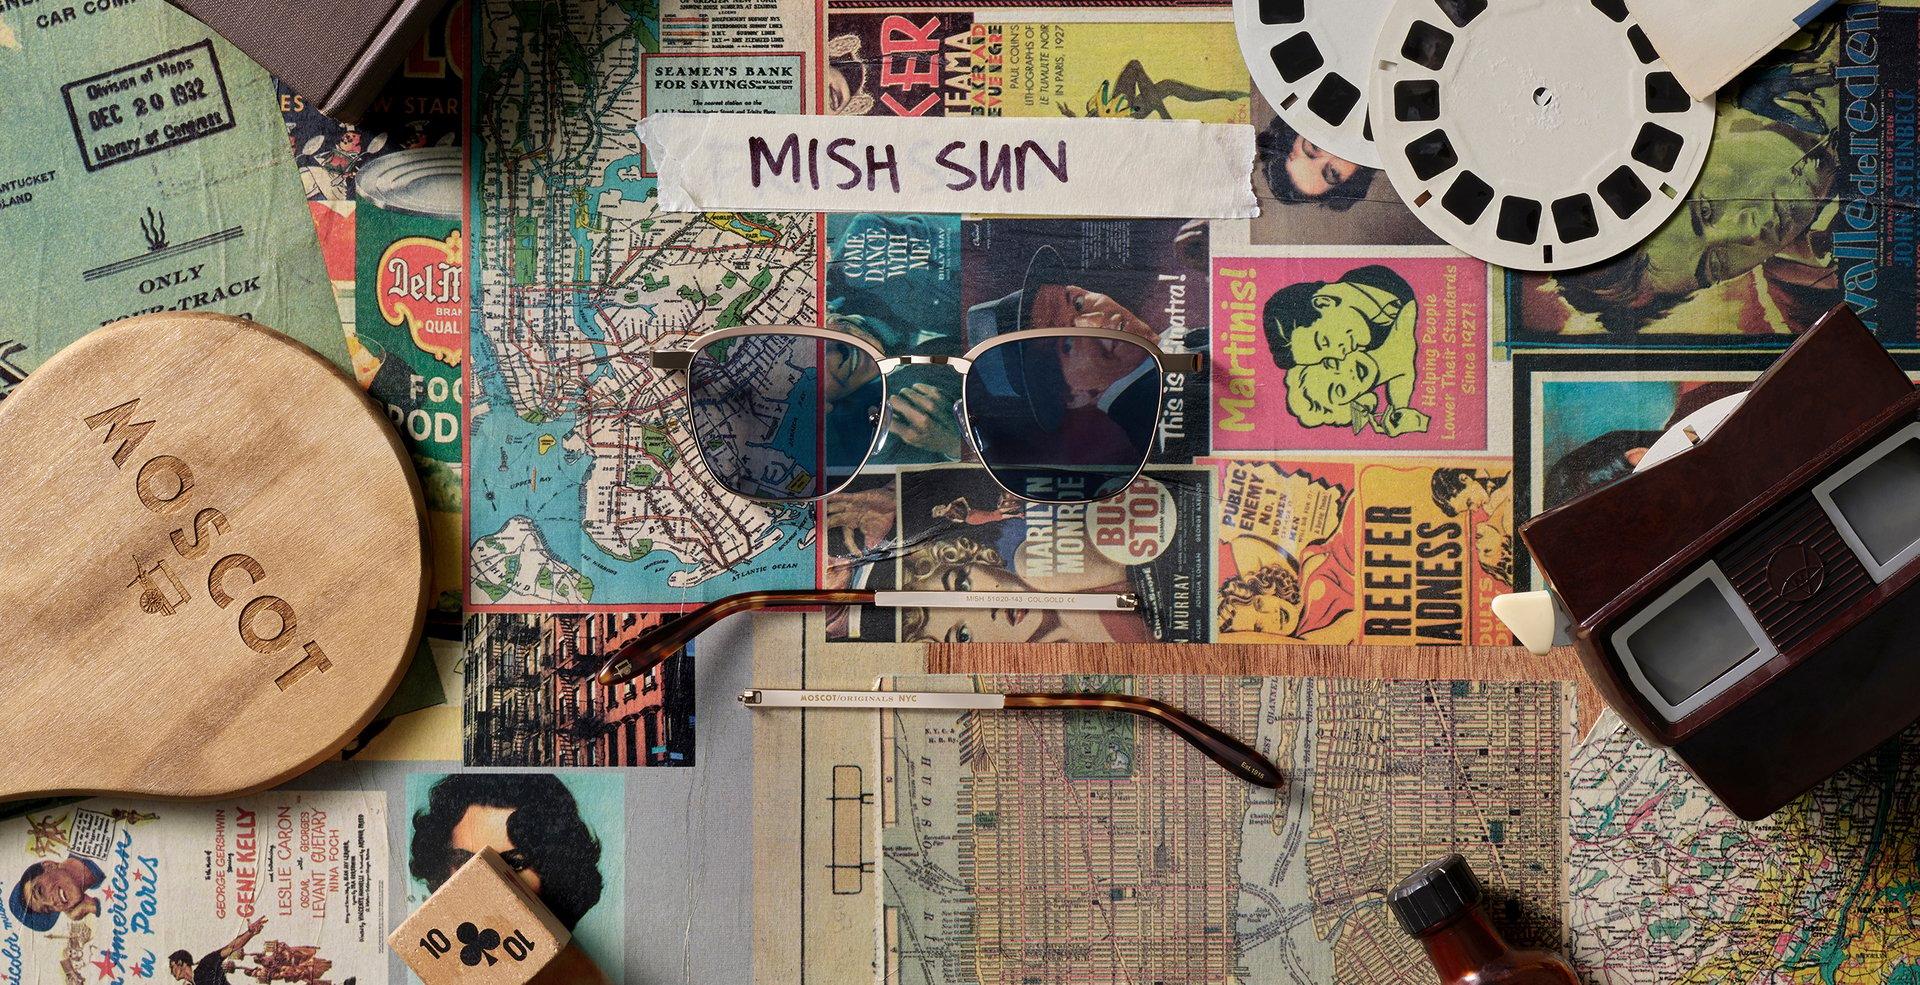 The MISH SUN